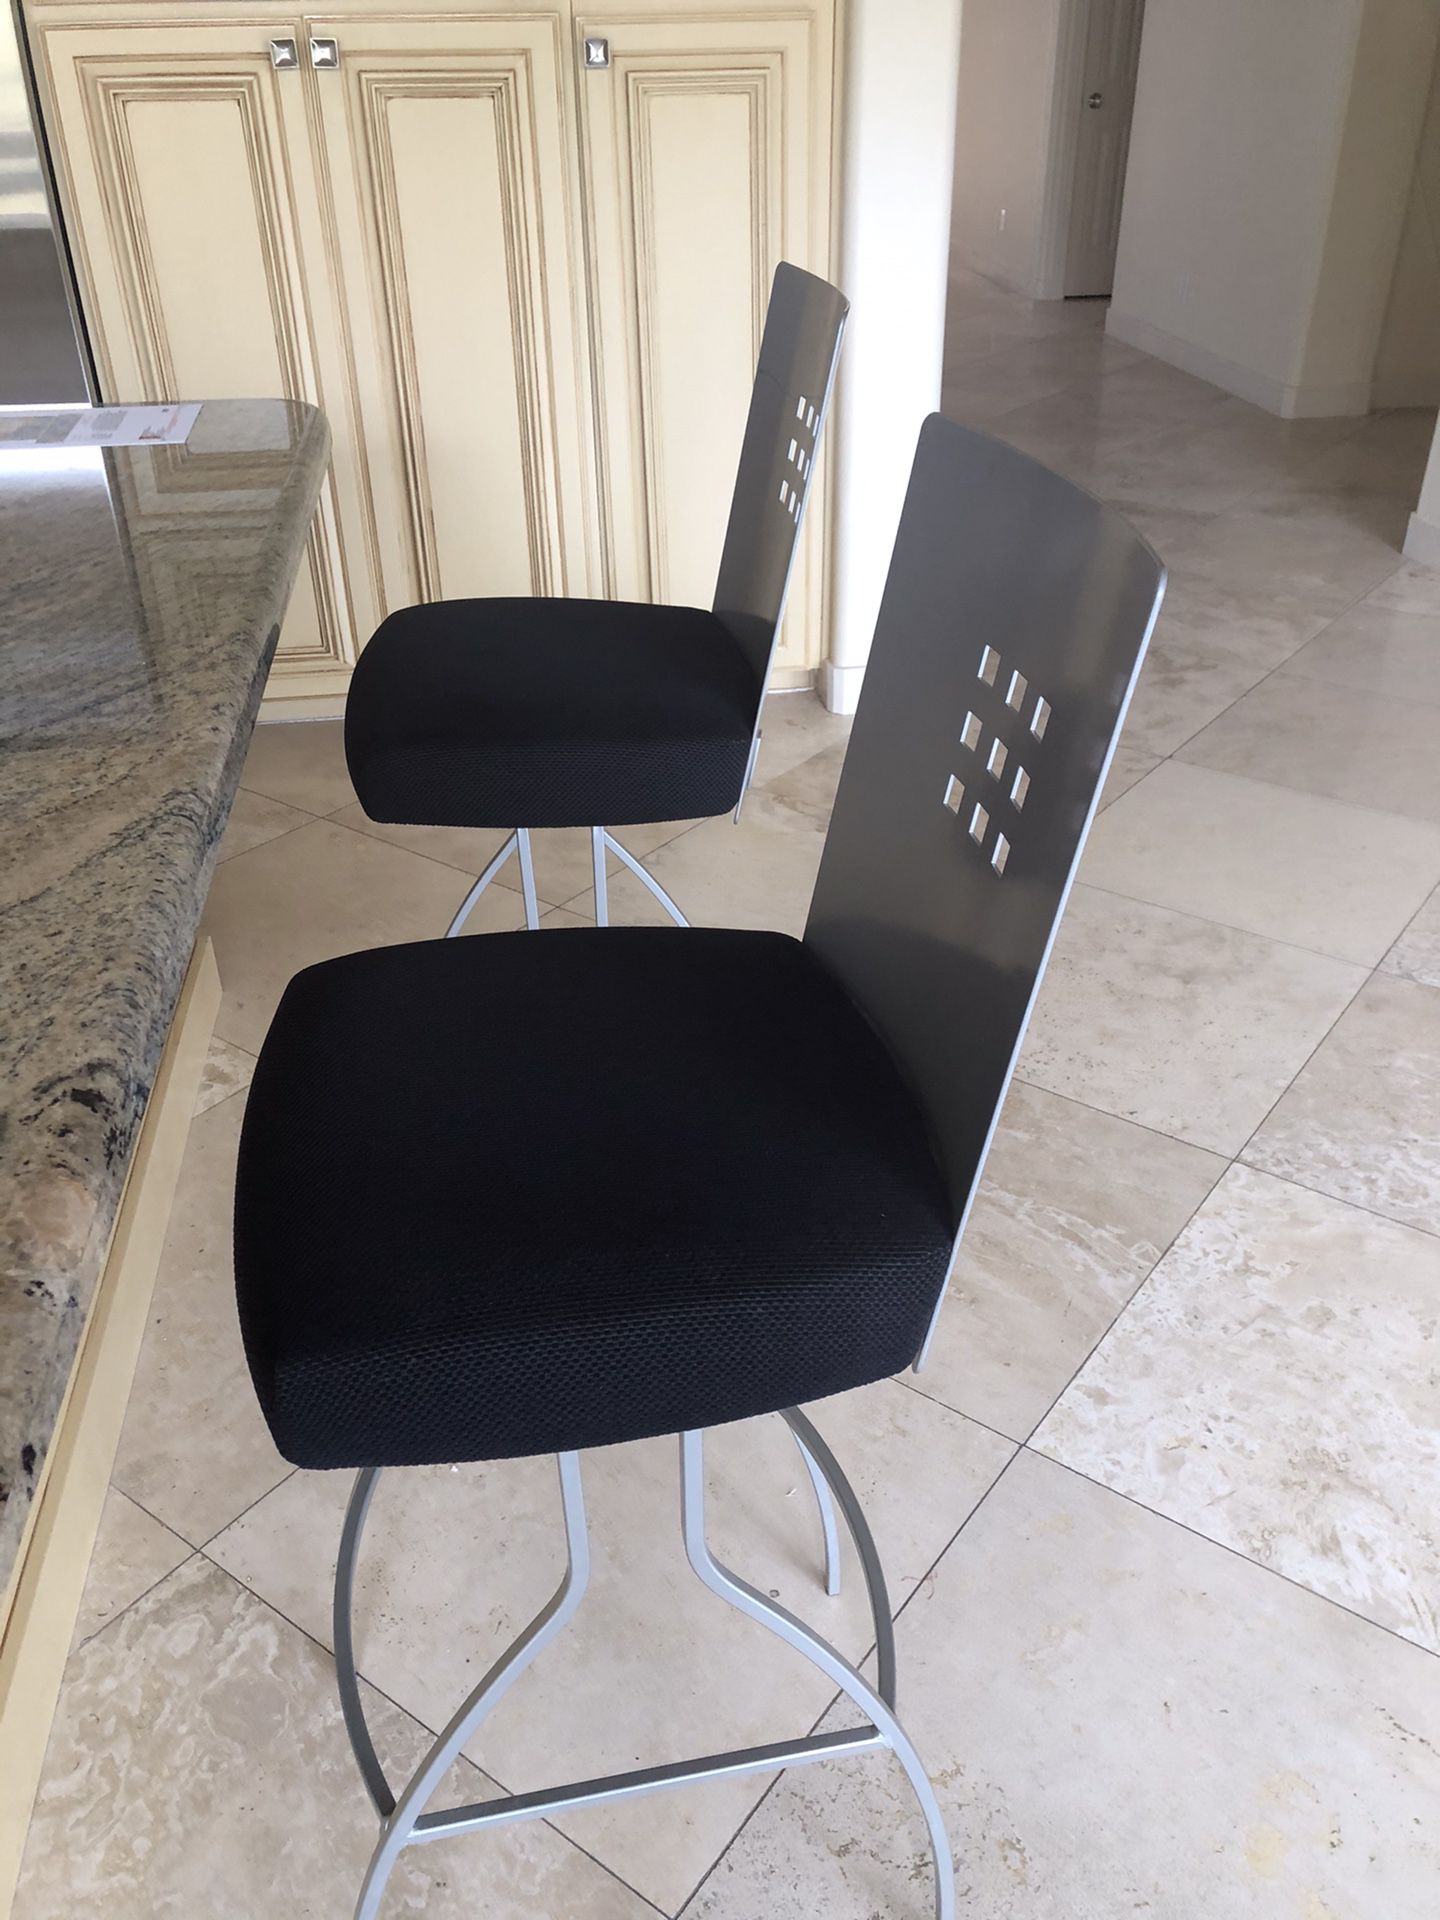 2 metal swivel bar stools $ 155.00 (30” high - charcoal black cushions- )